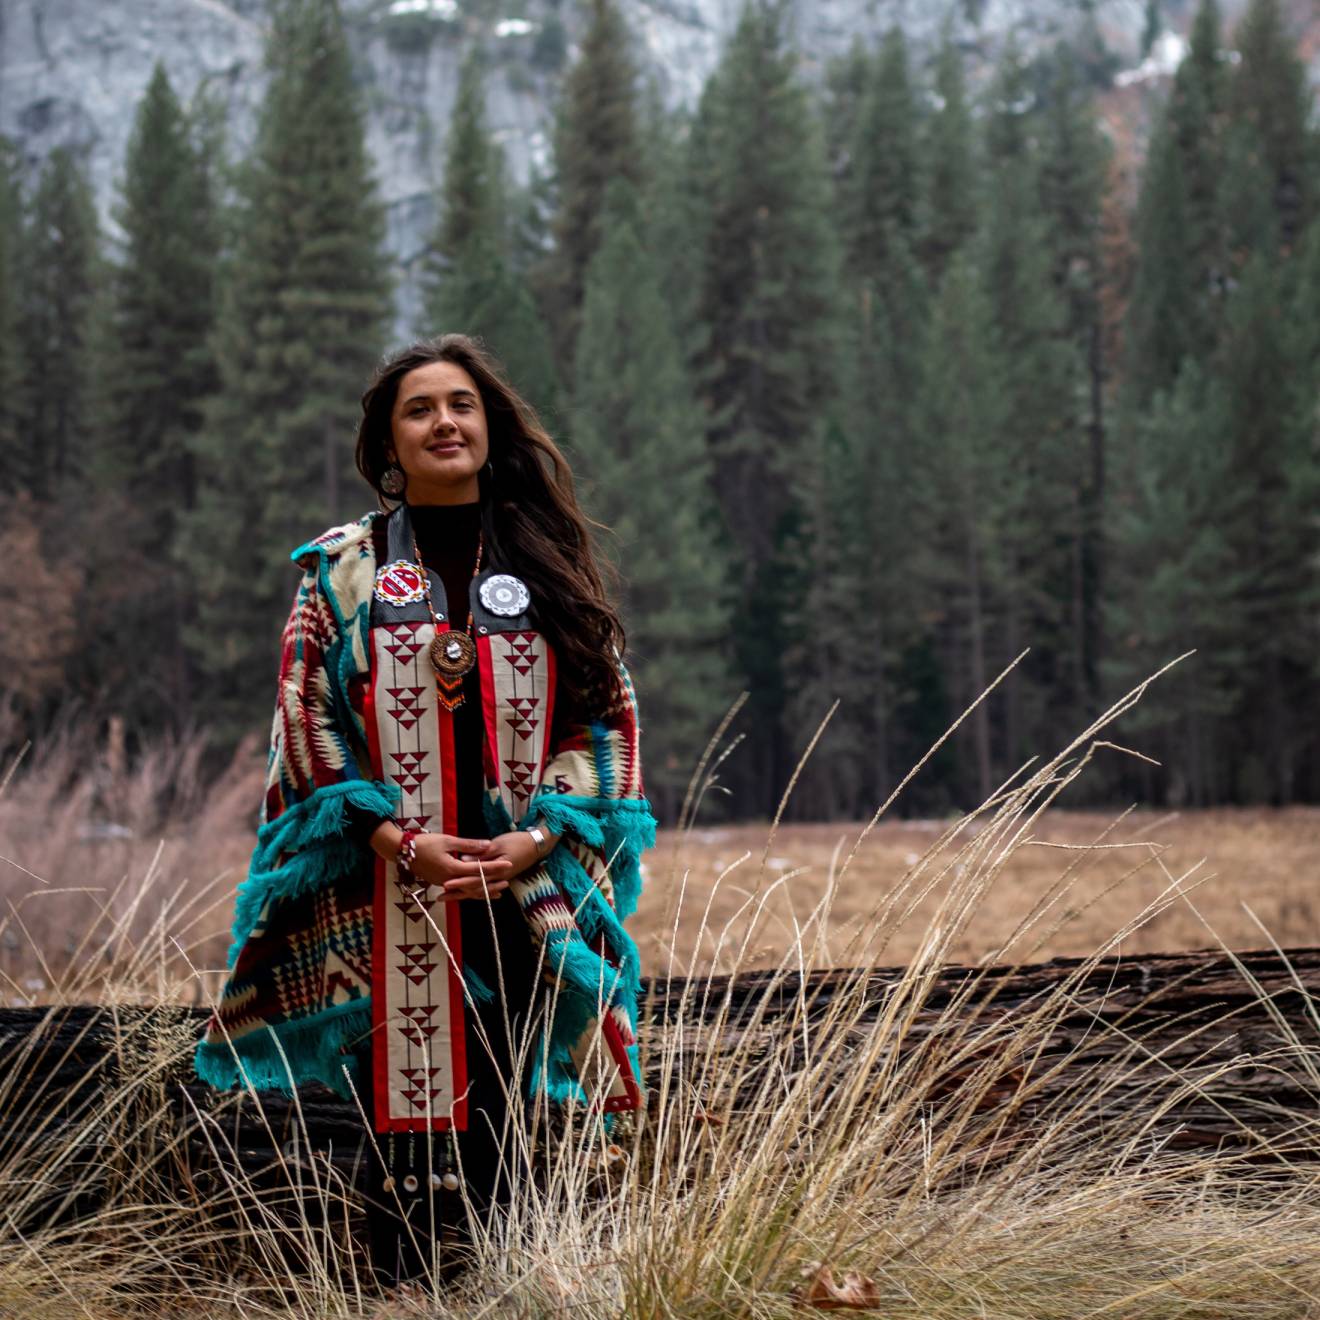 Irene Vasquez at Yosemite in traditional tribal clothing